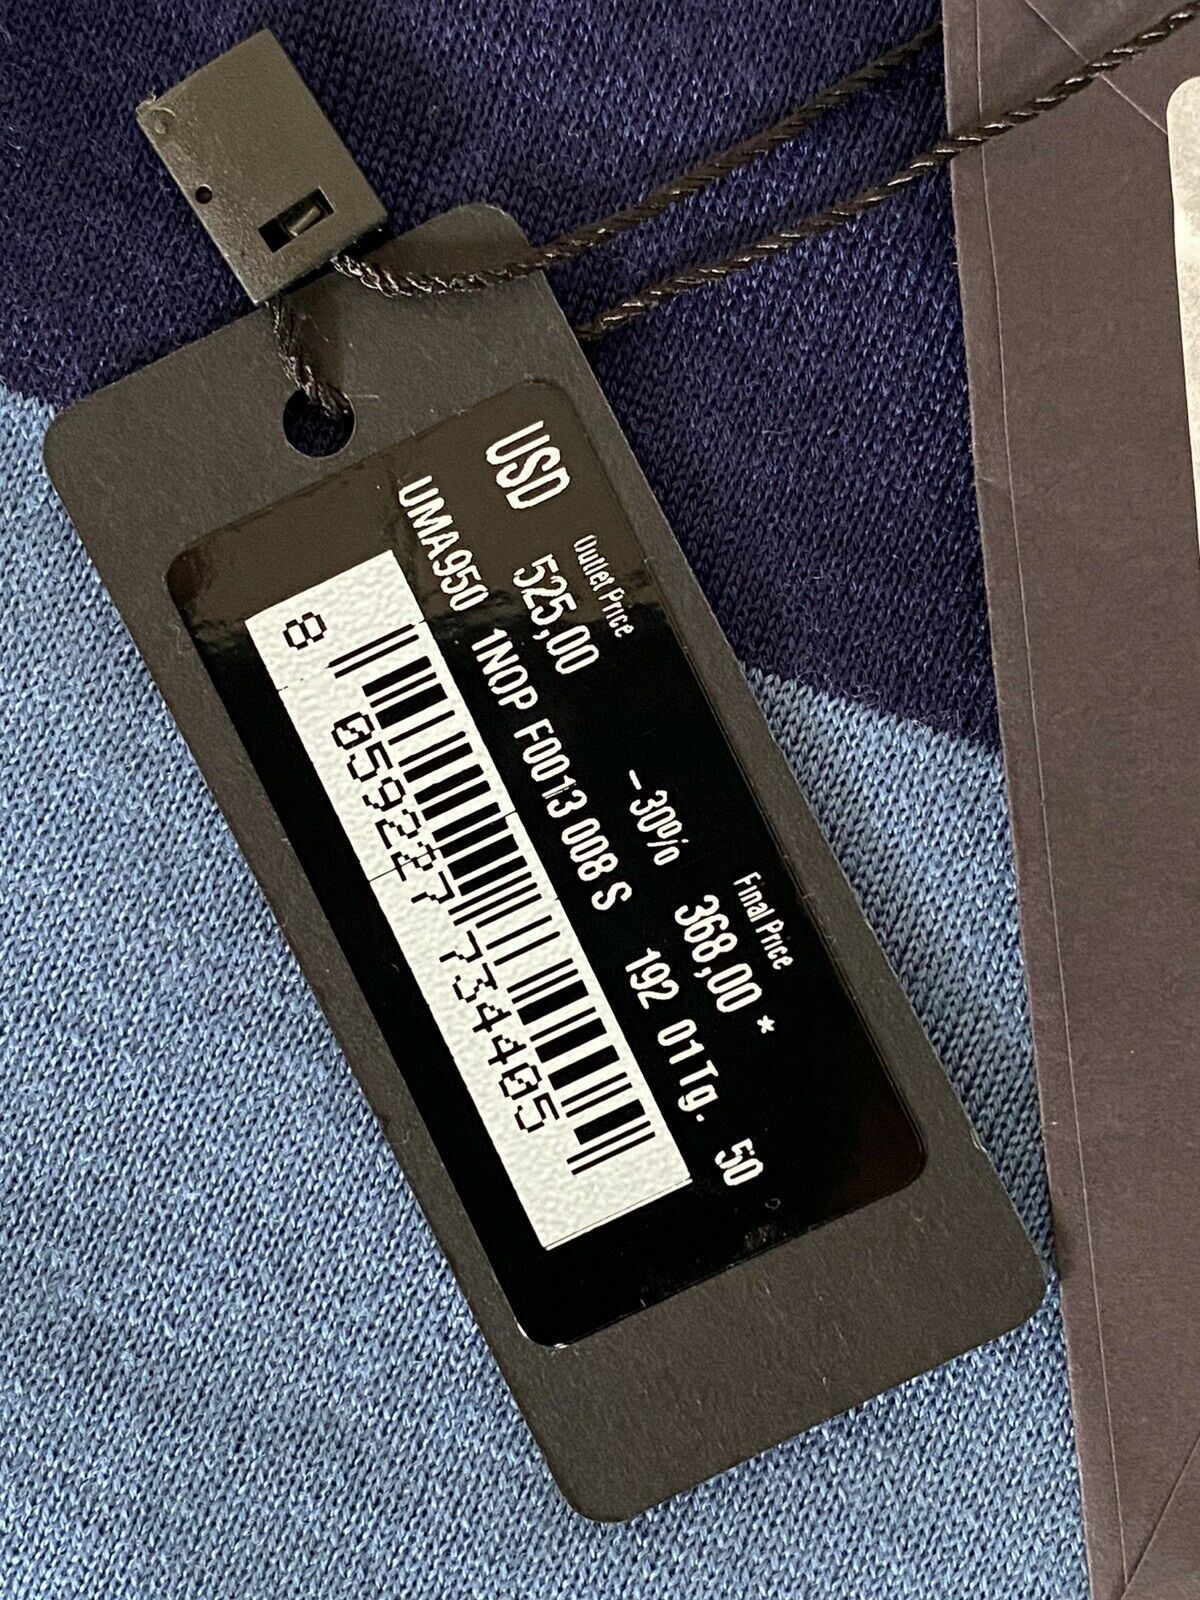 NWT $980 Prada Short Sleeve Wool Blue Polo Shirt UMA950 Made in Italy